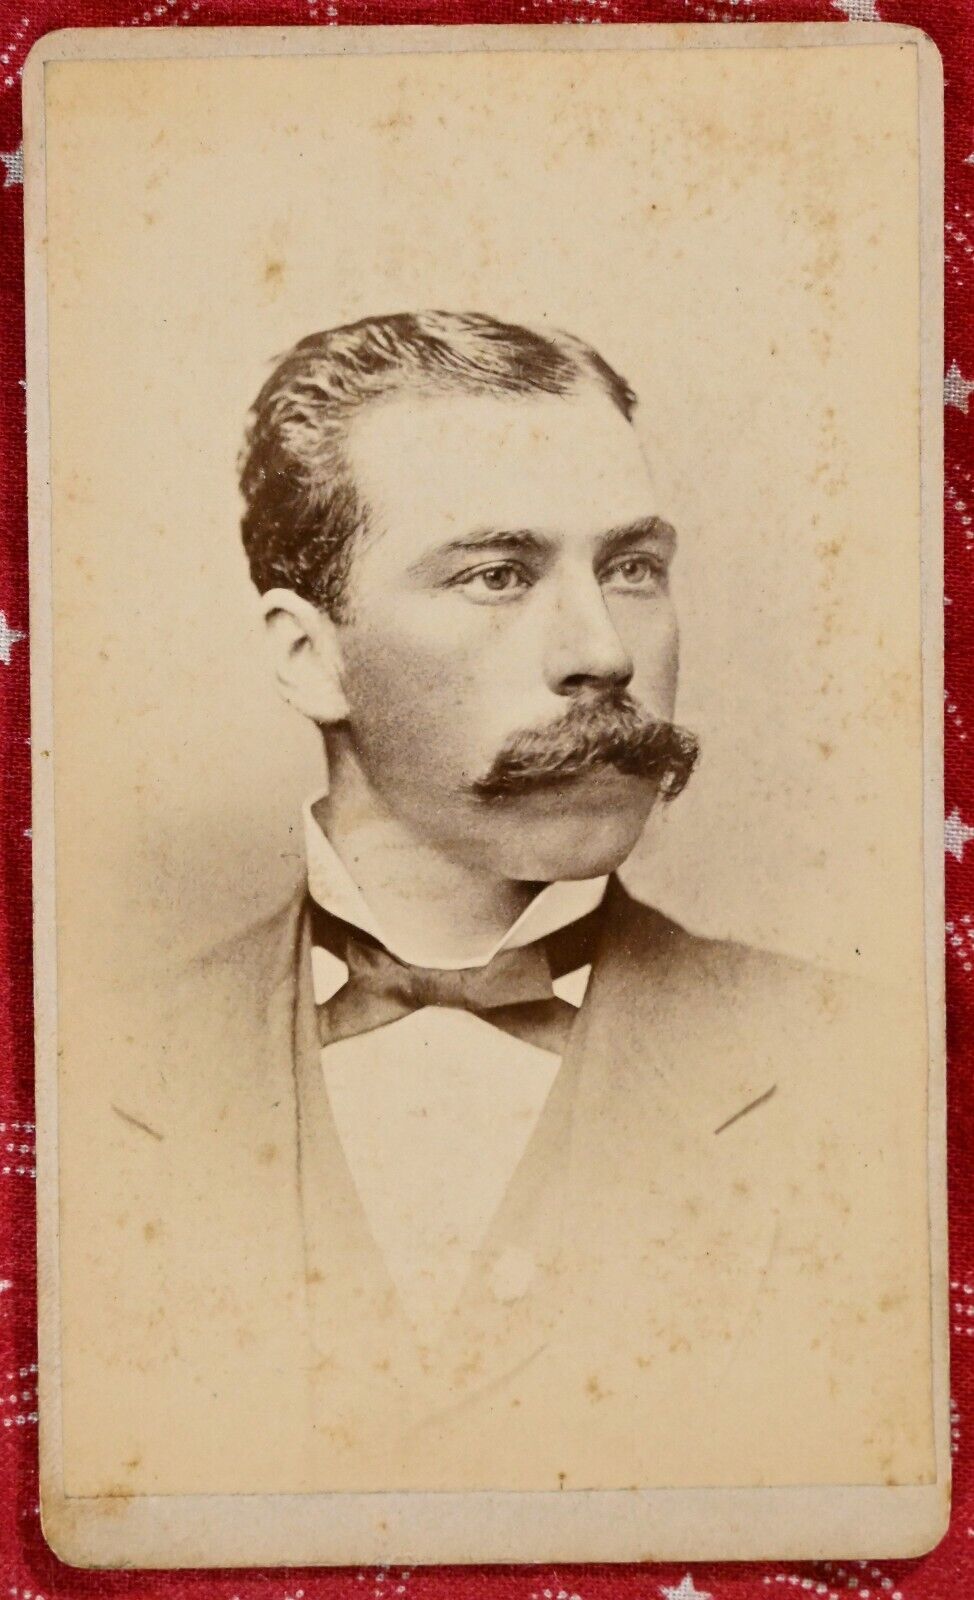 Early CDV: Man Generous Mustache; Interesting Card Back; Antique Photo CDV